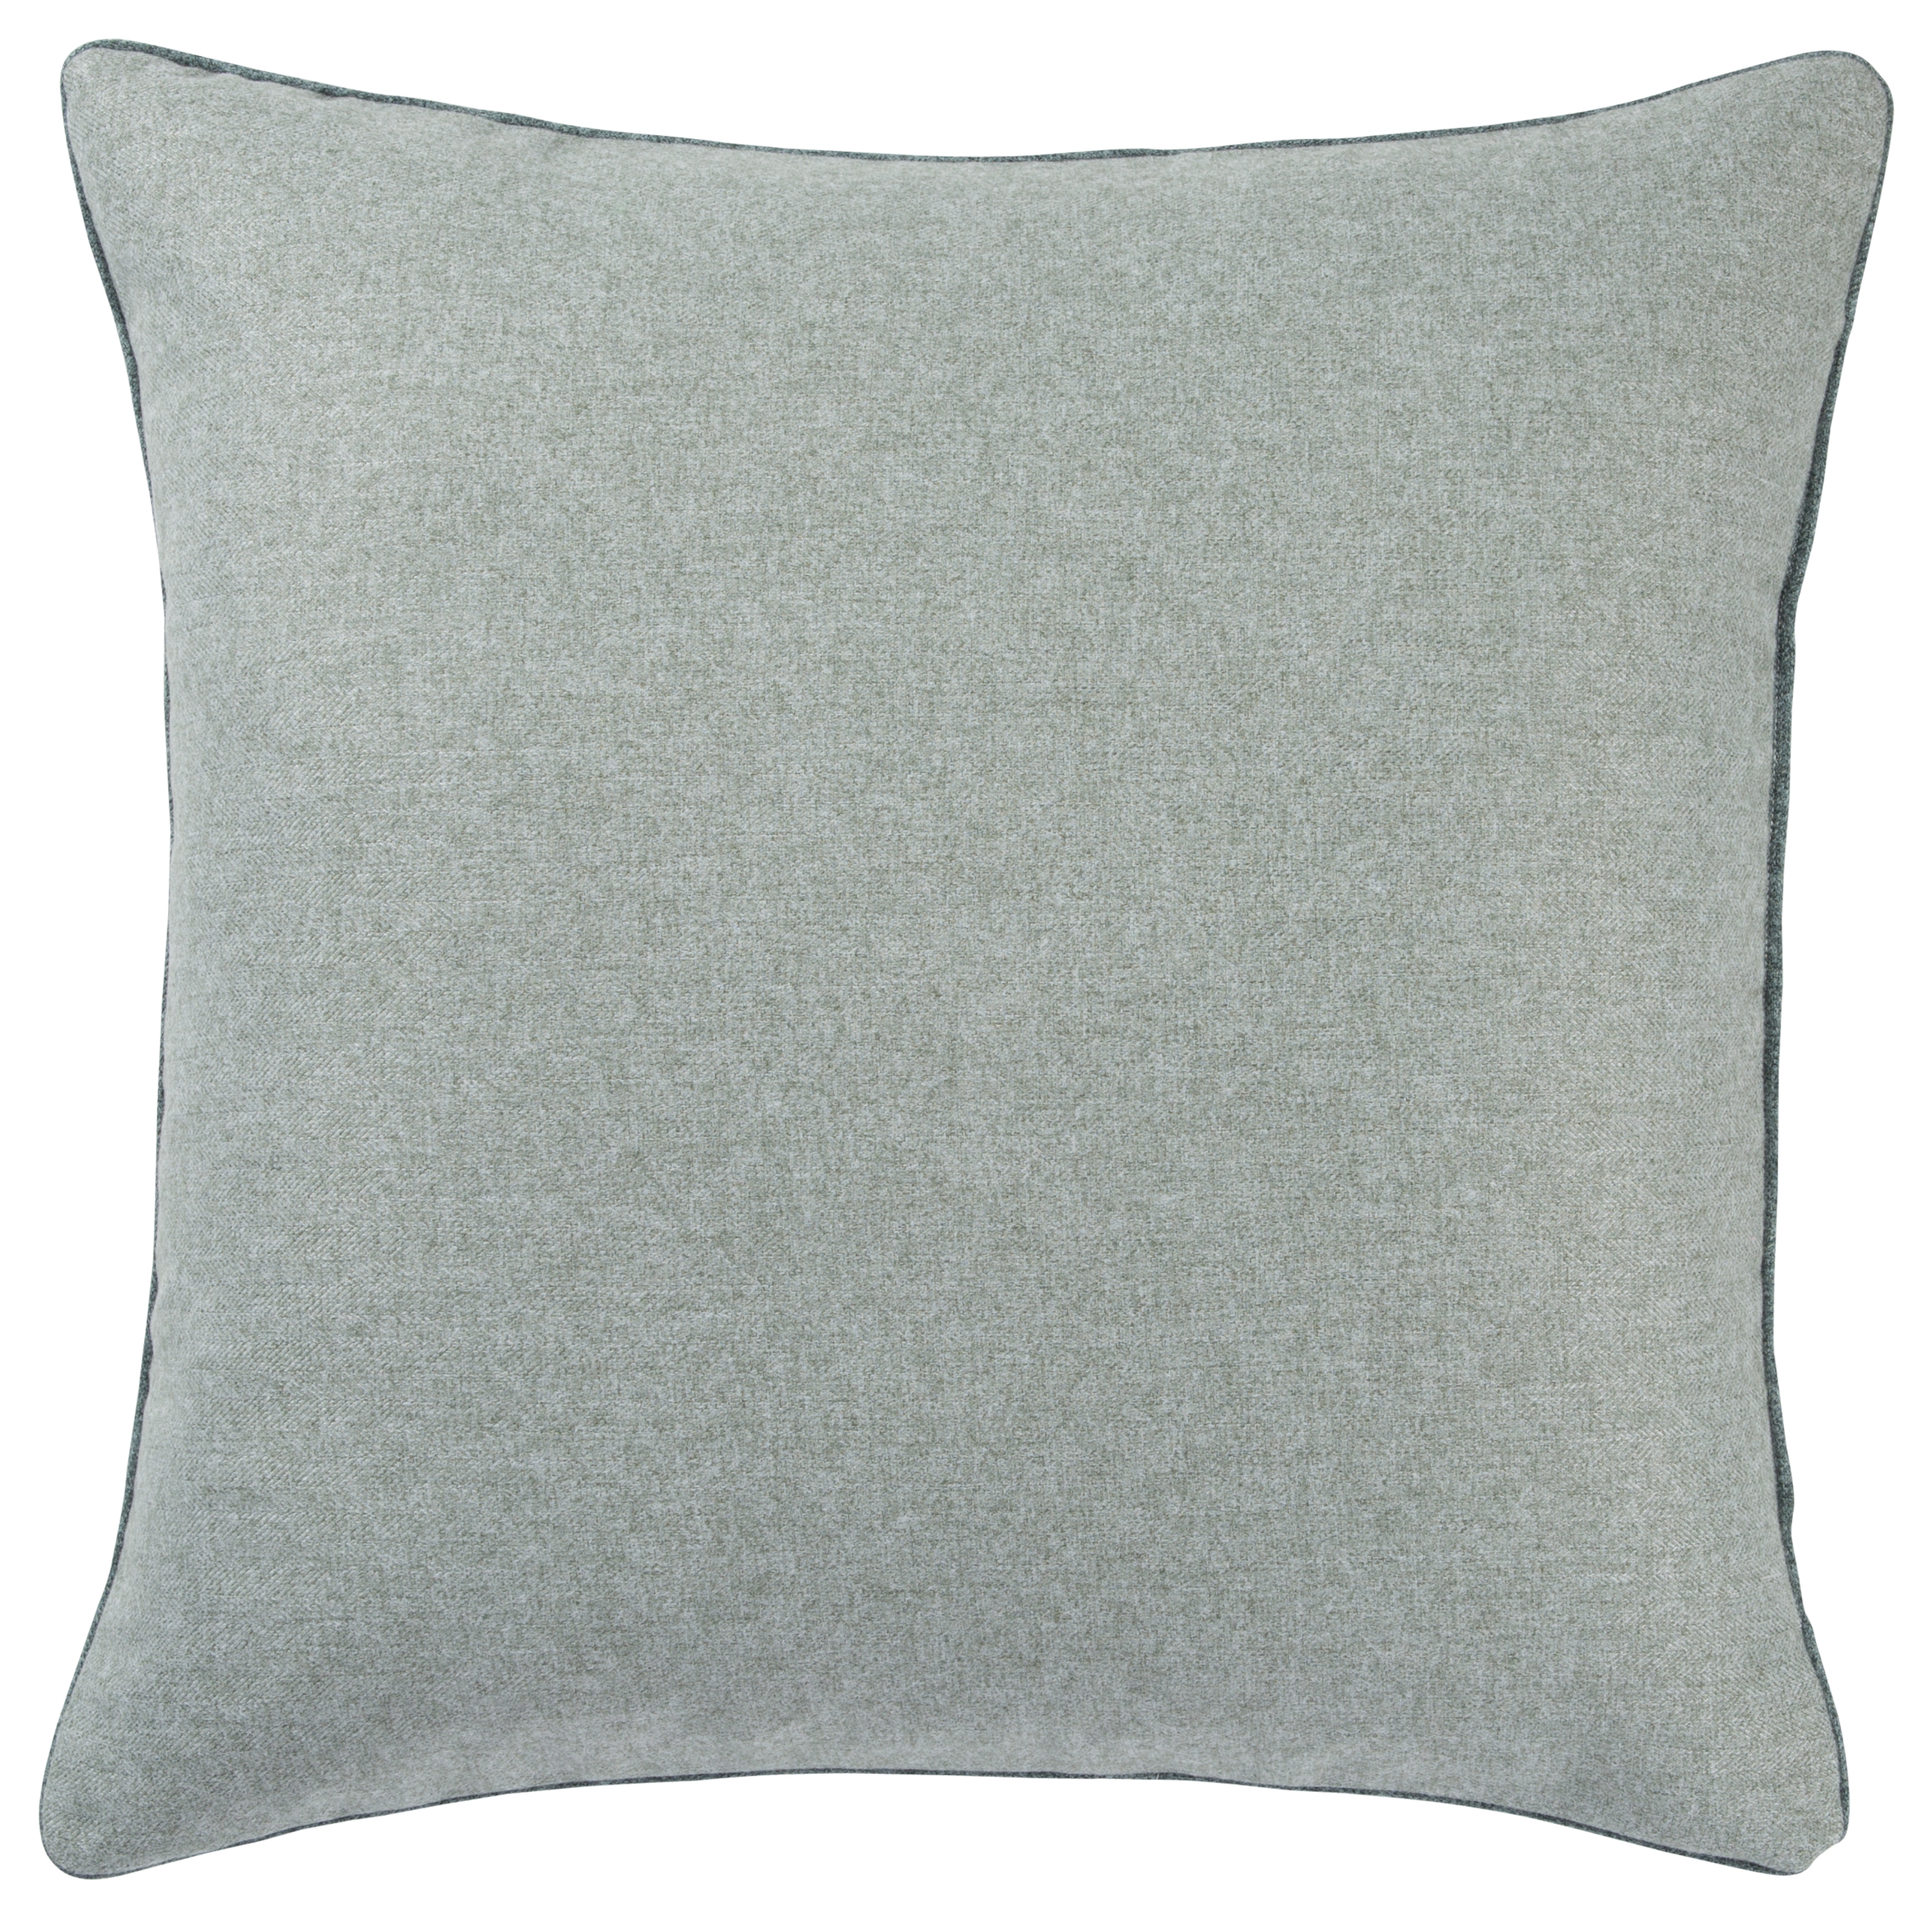 Design (US) Slate Gary 22"X22" Pillow - Image 1